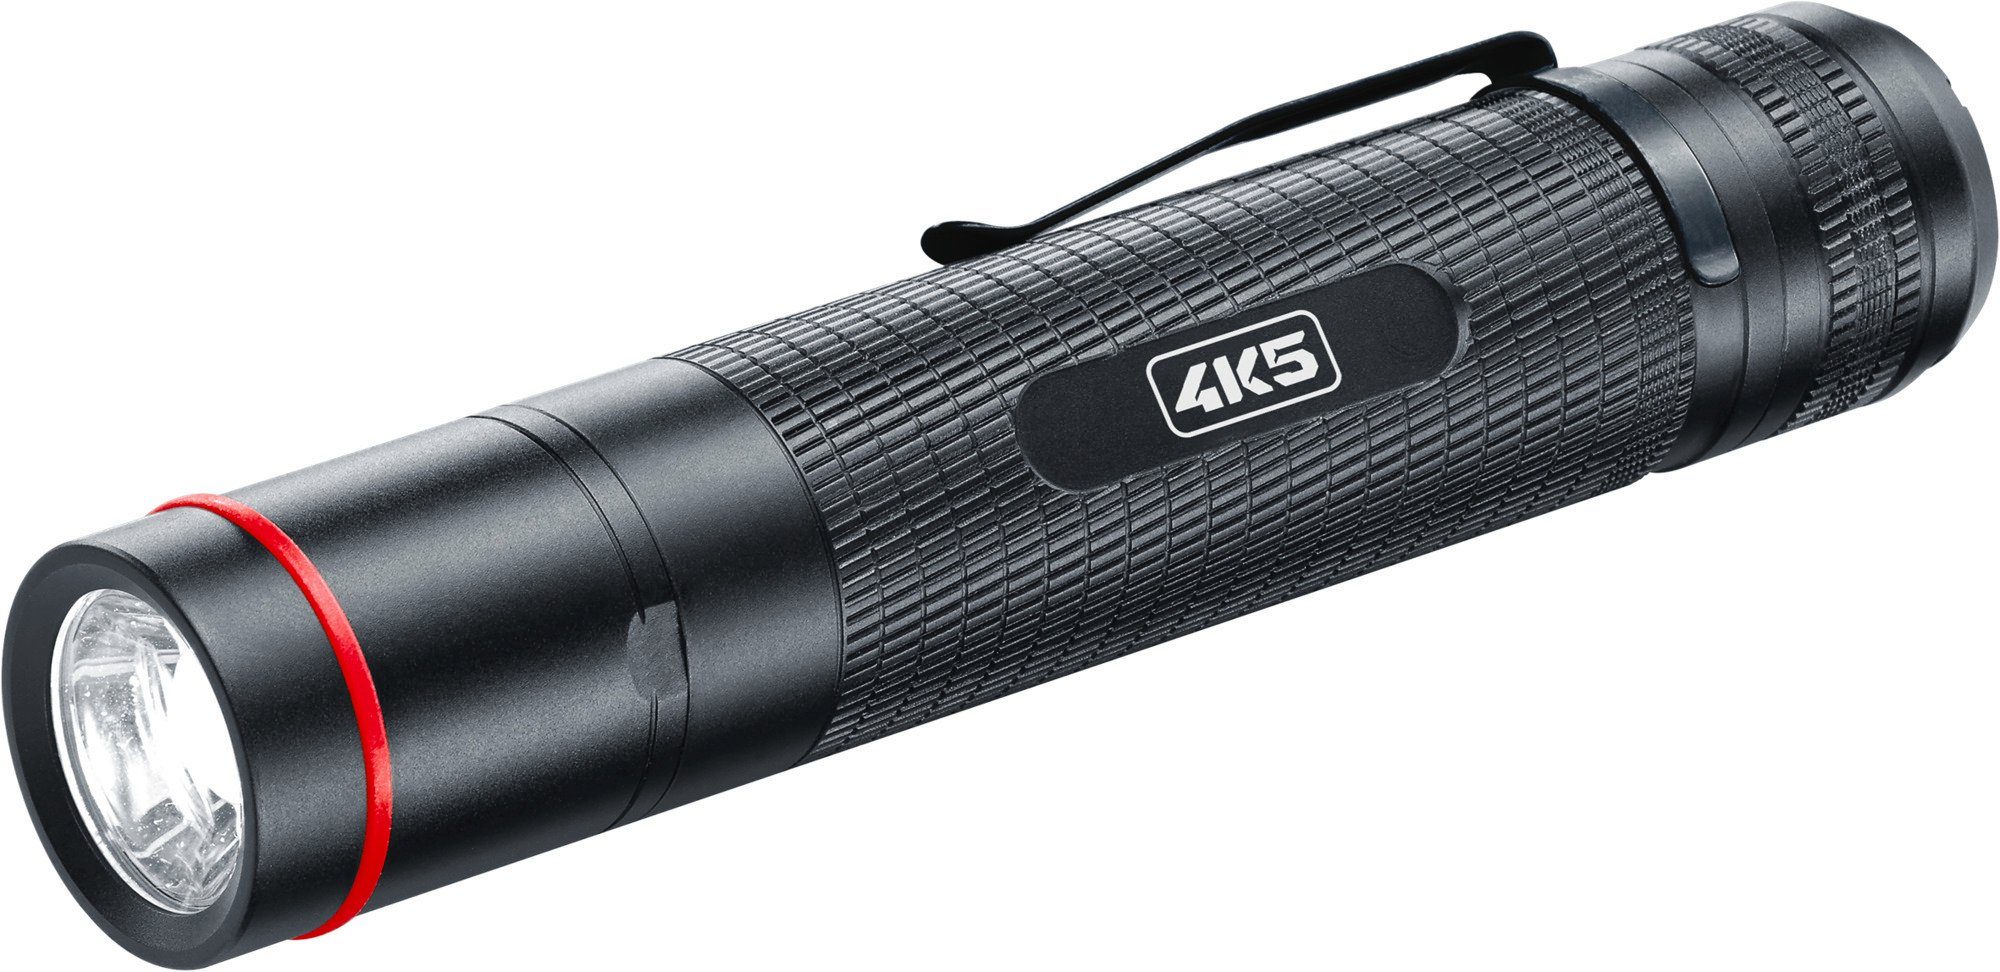 4K5 Prolight Taschenlampe 4K5 Taschenlampe mit Tools Holster Tools PL 900 (Leuchtkraft 900